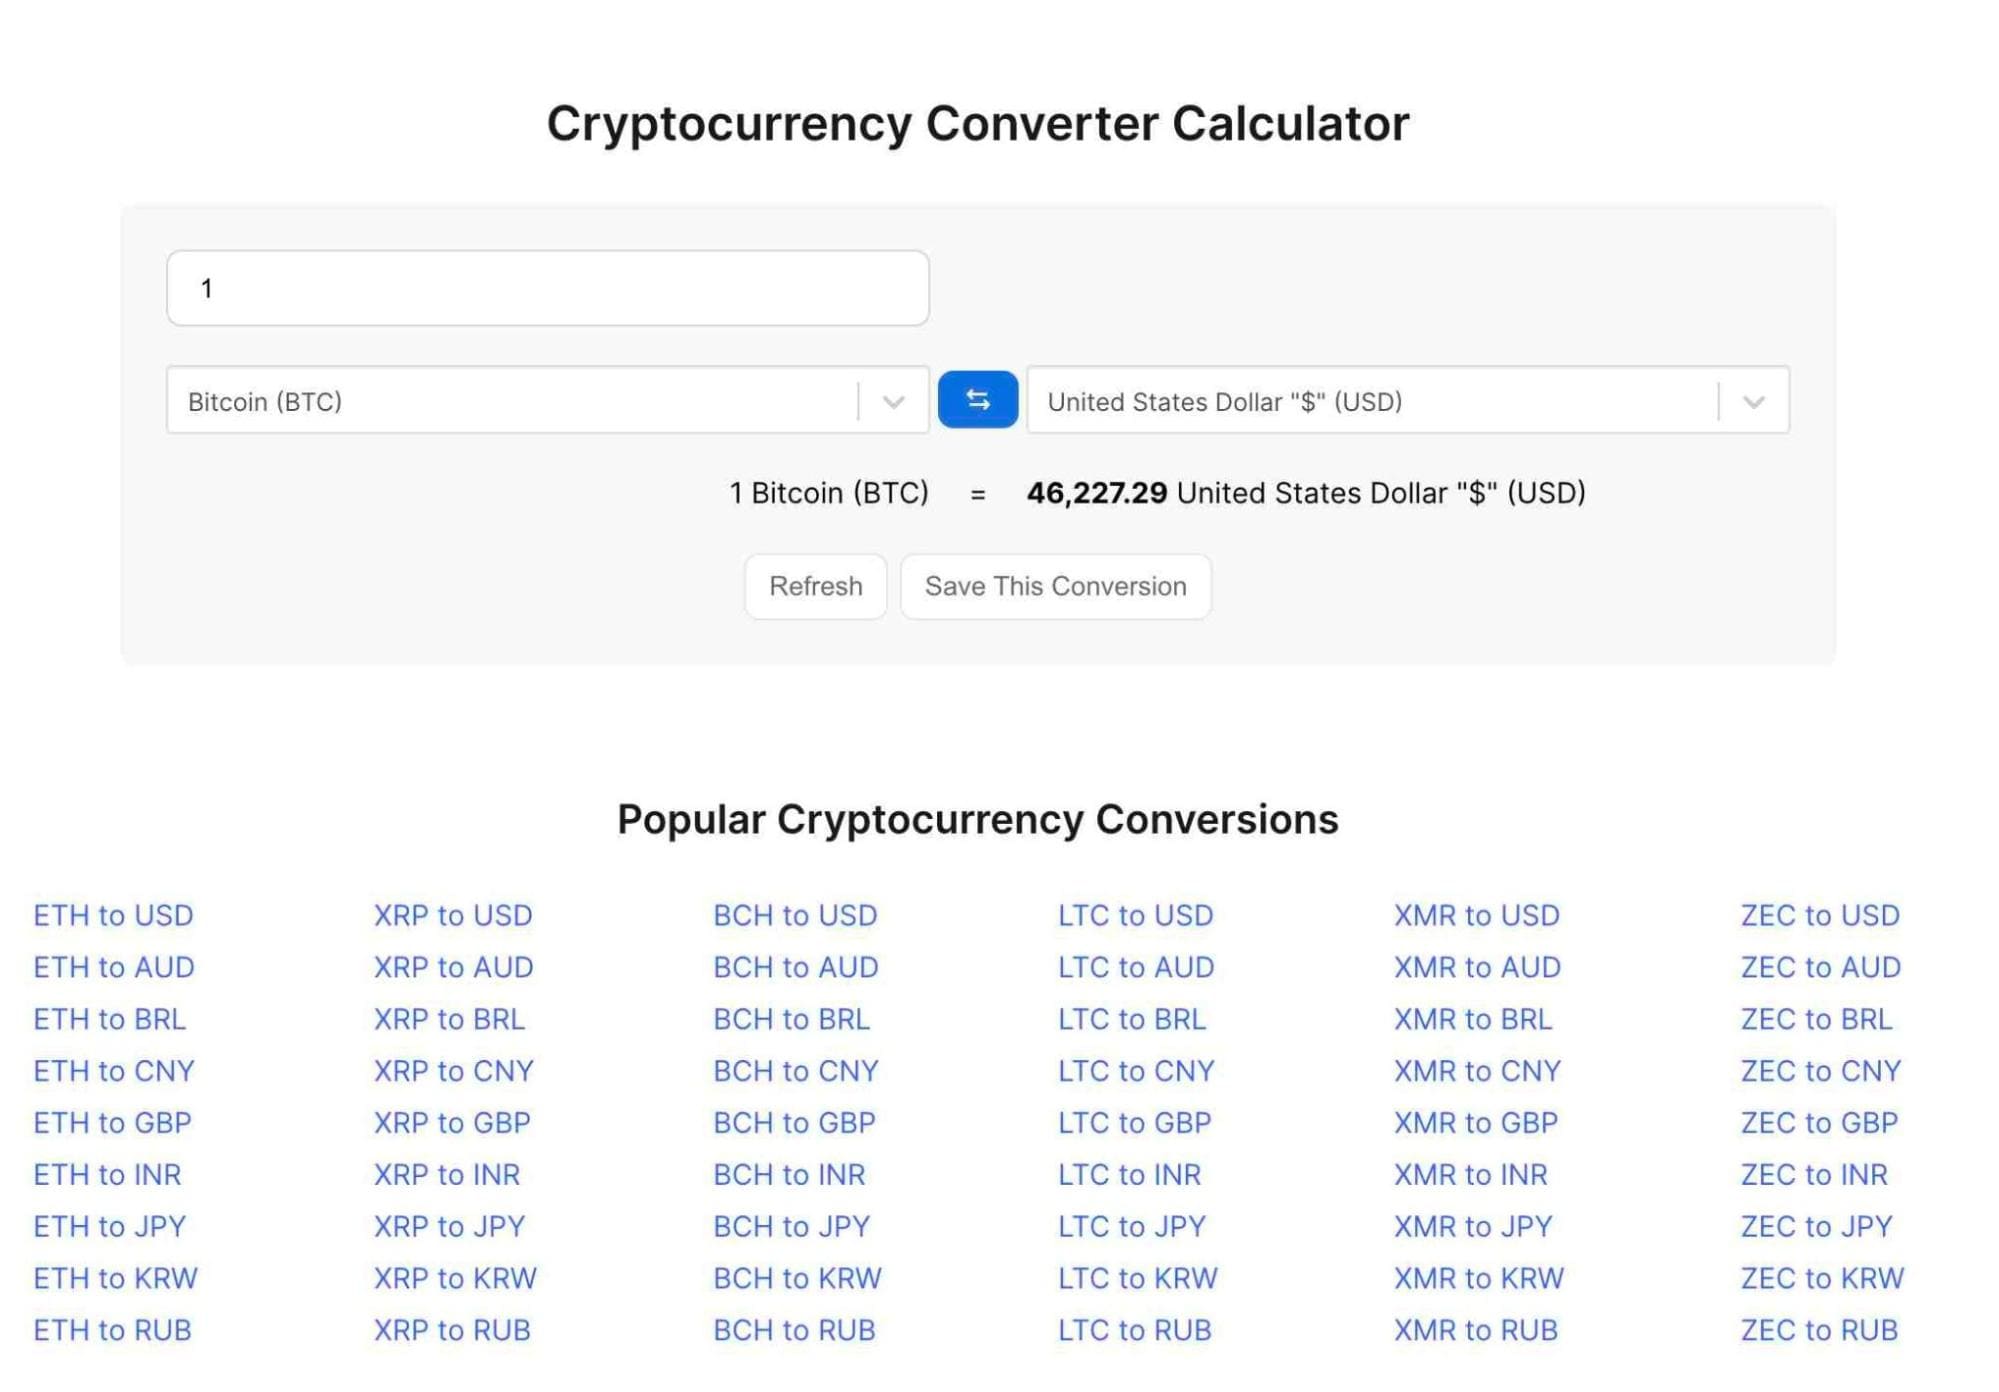 Crypto Calculator: A Simple Way to Estimate Profits or Losses - NerdWallet